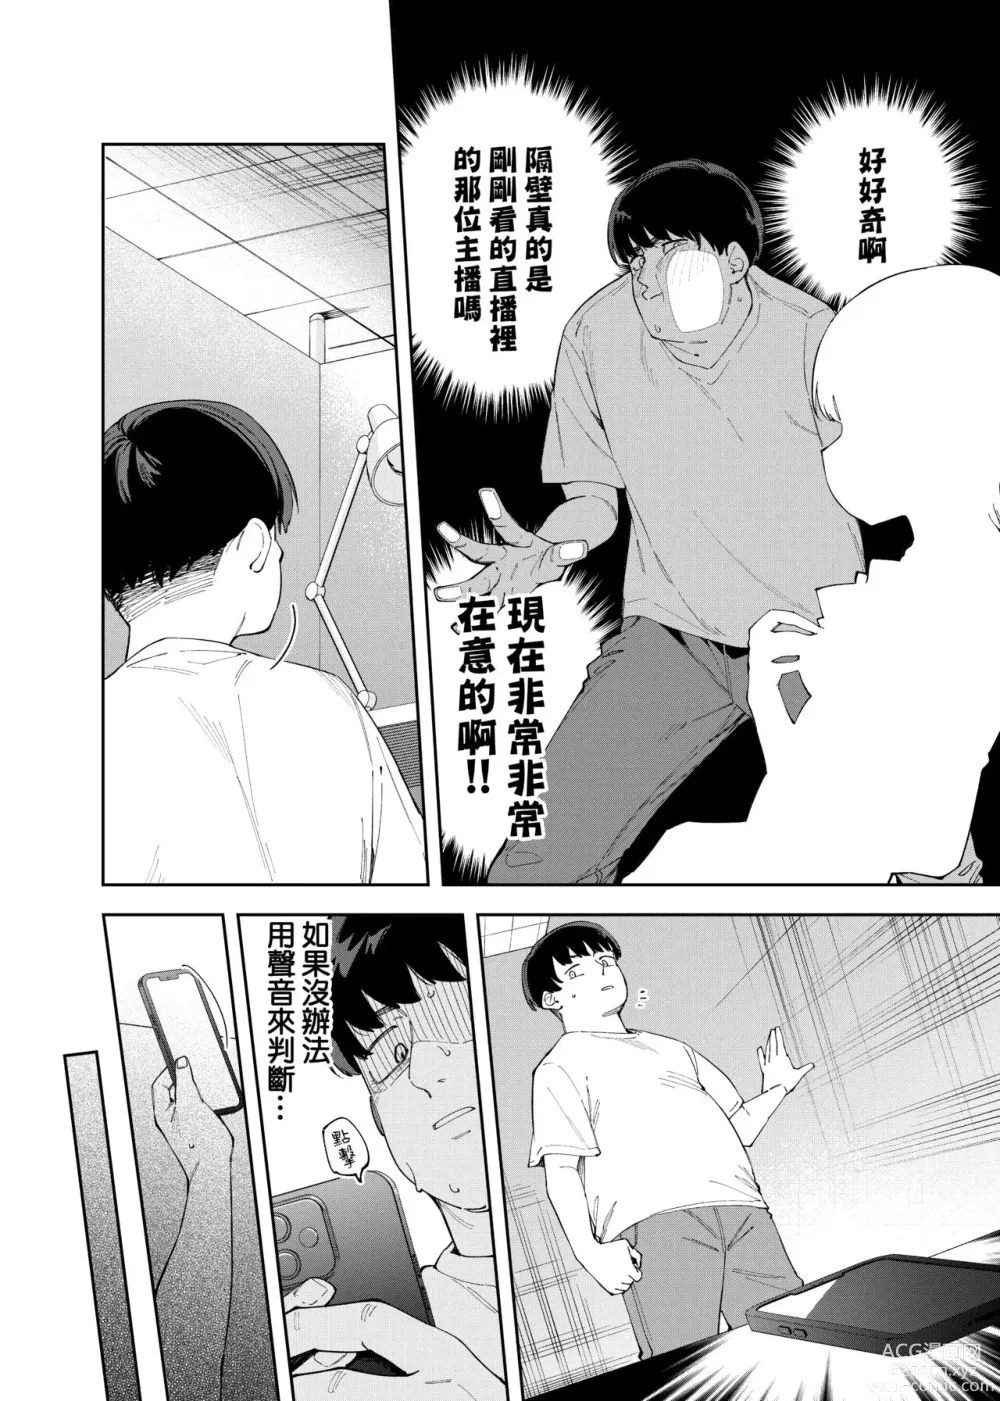 Page 10 of manga rinzin ha yuumei haisin sya4 nin me